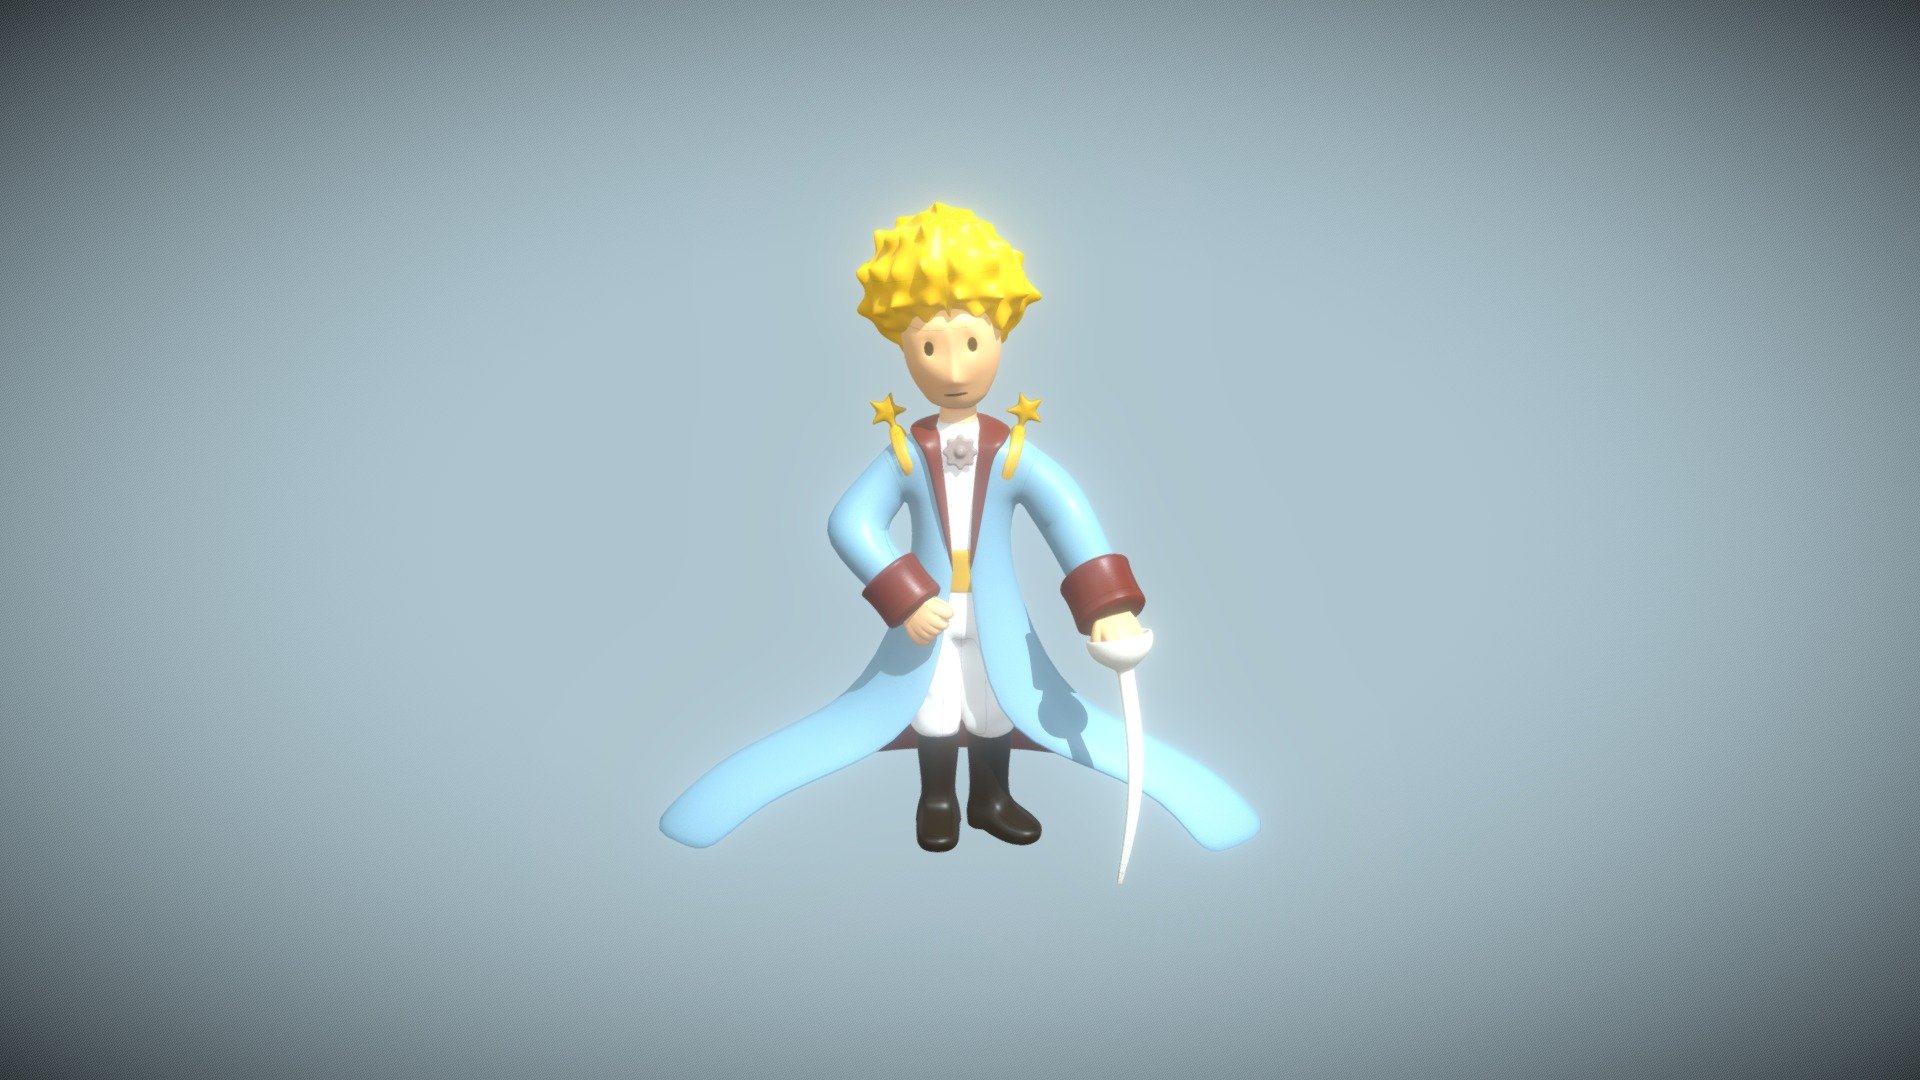 Little Prince - Buy Royalty Free 3D Model By Blenduffo (@Blenduffo)  [A3Cb866]